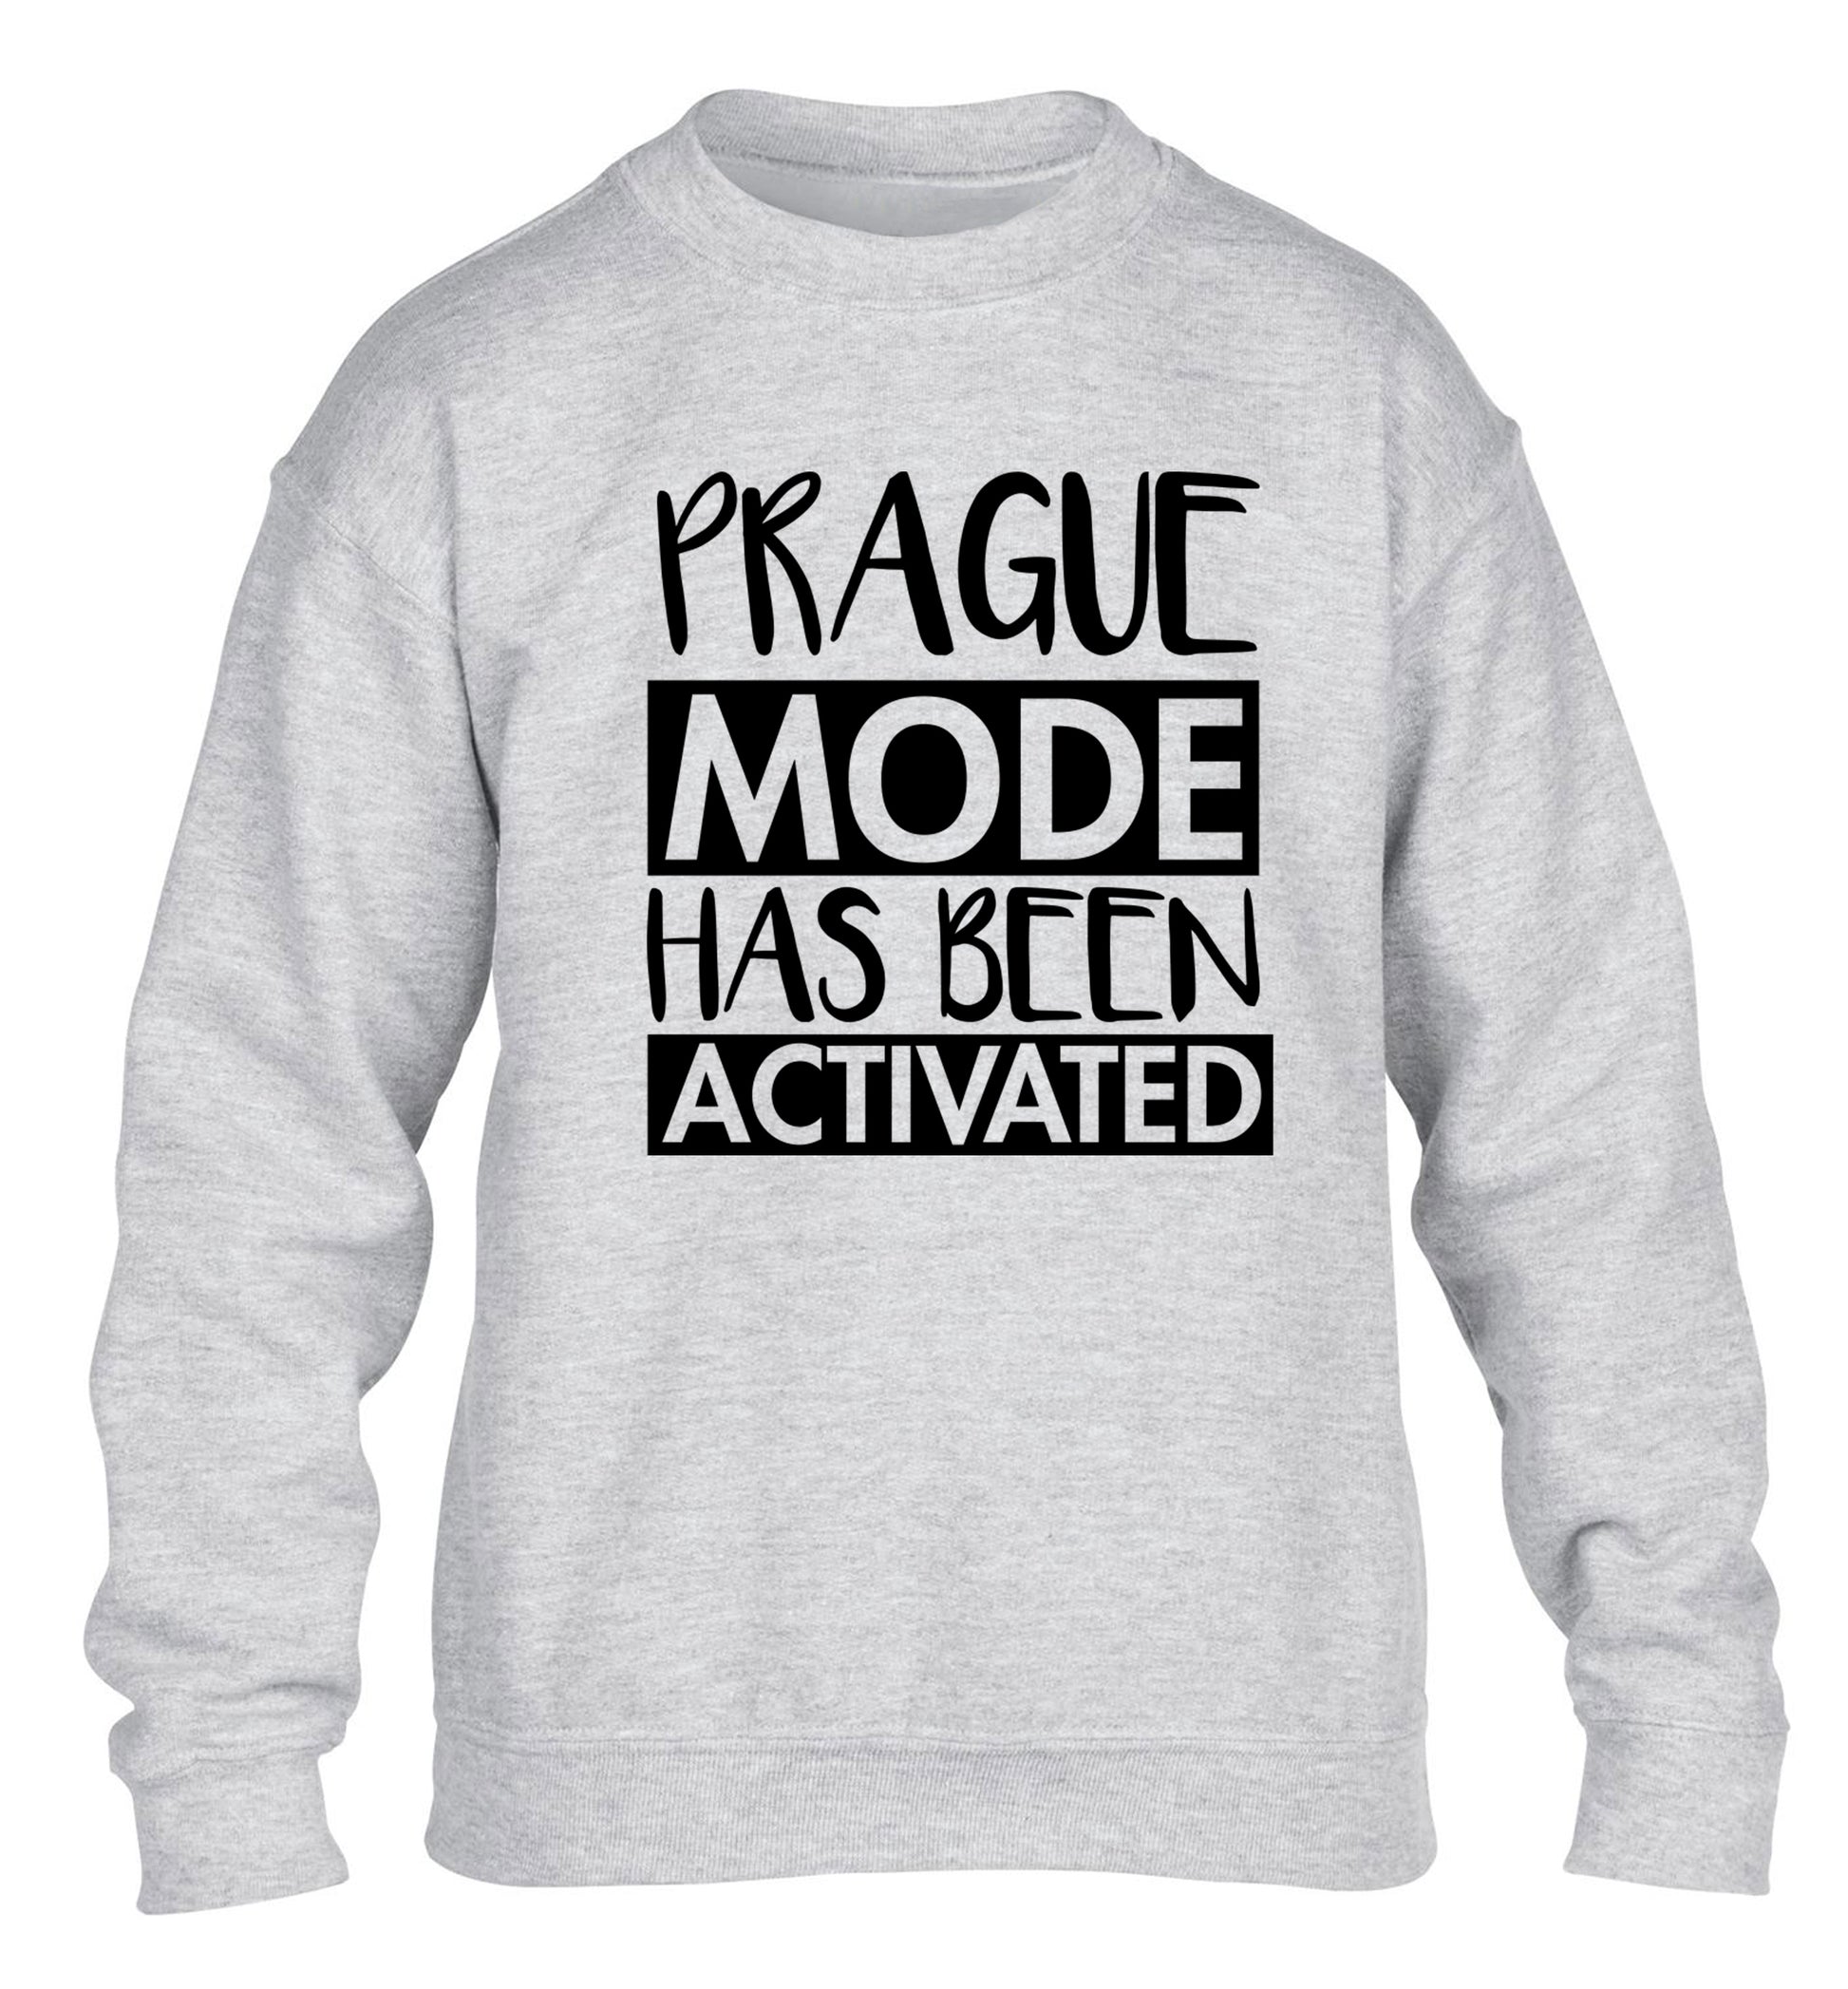 Prague mode has been activated children's grey sweater 12-13 Years